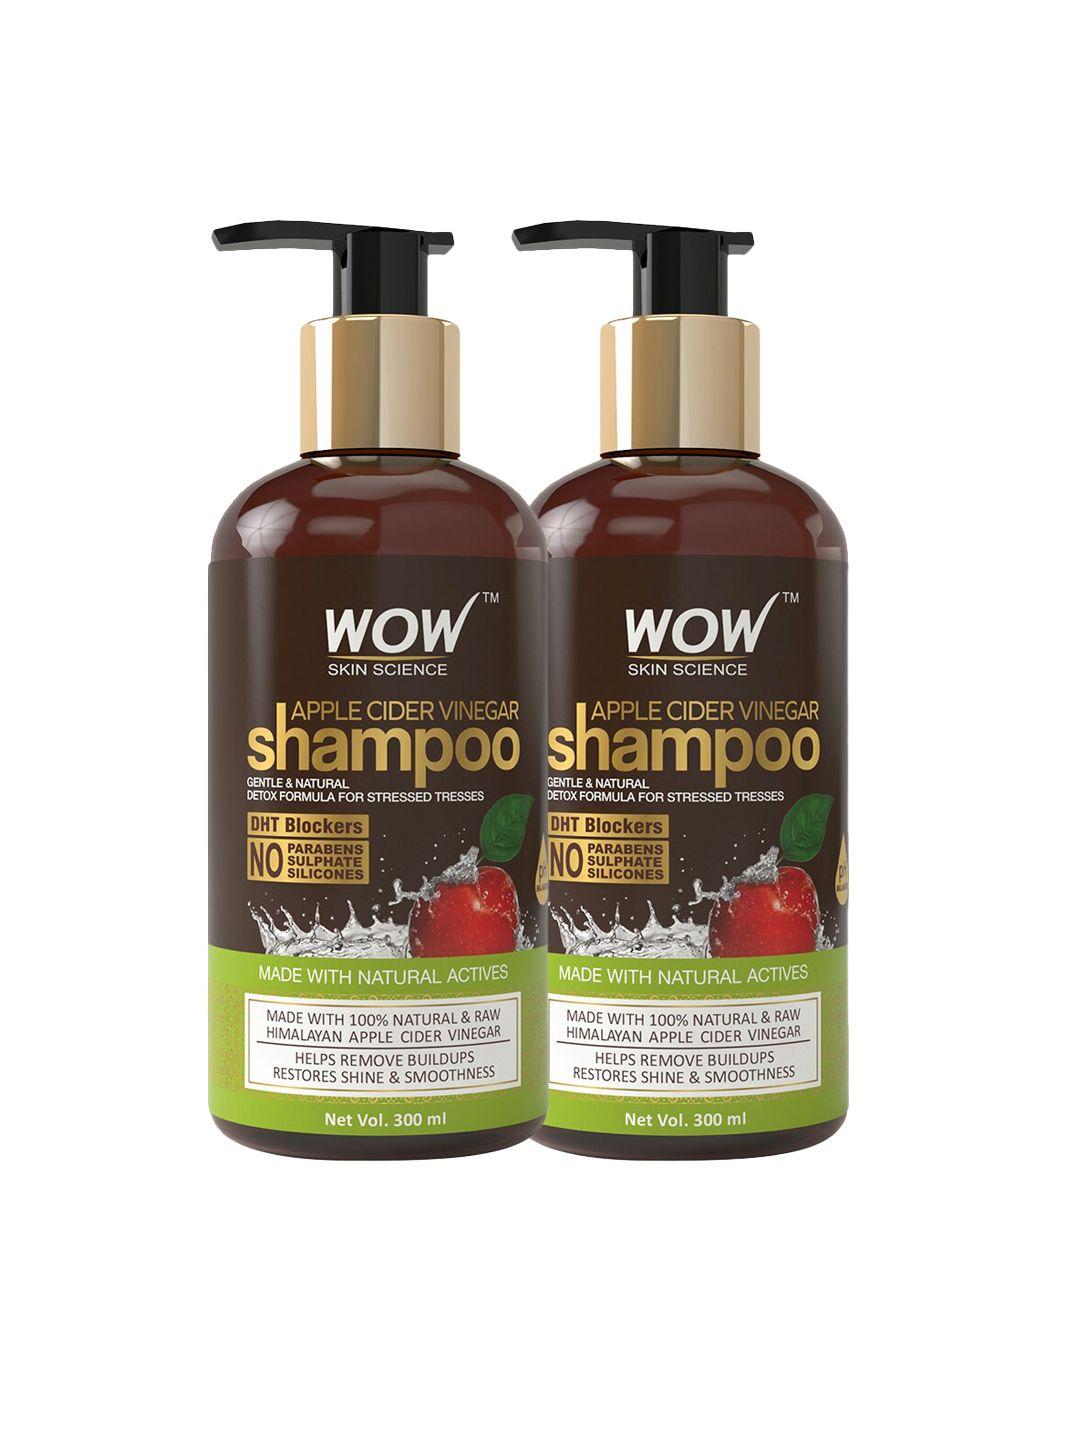 wow skin science set of 2 apple cider vinegar shampoo